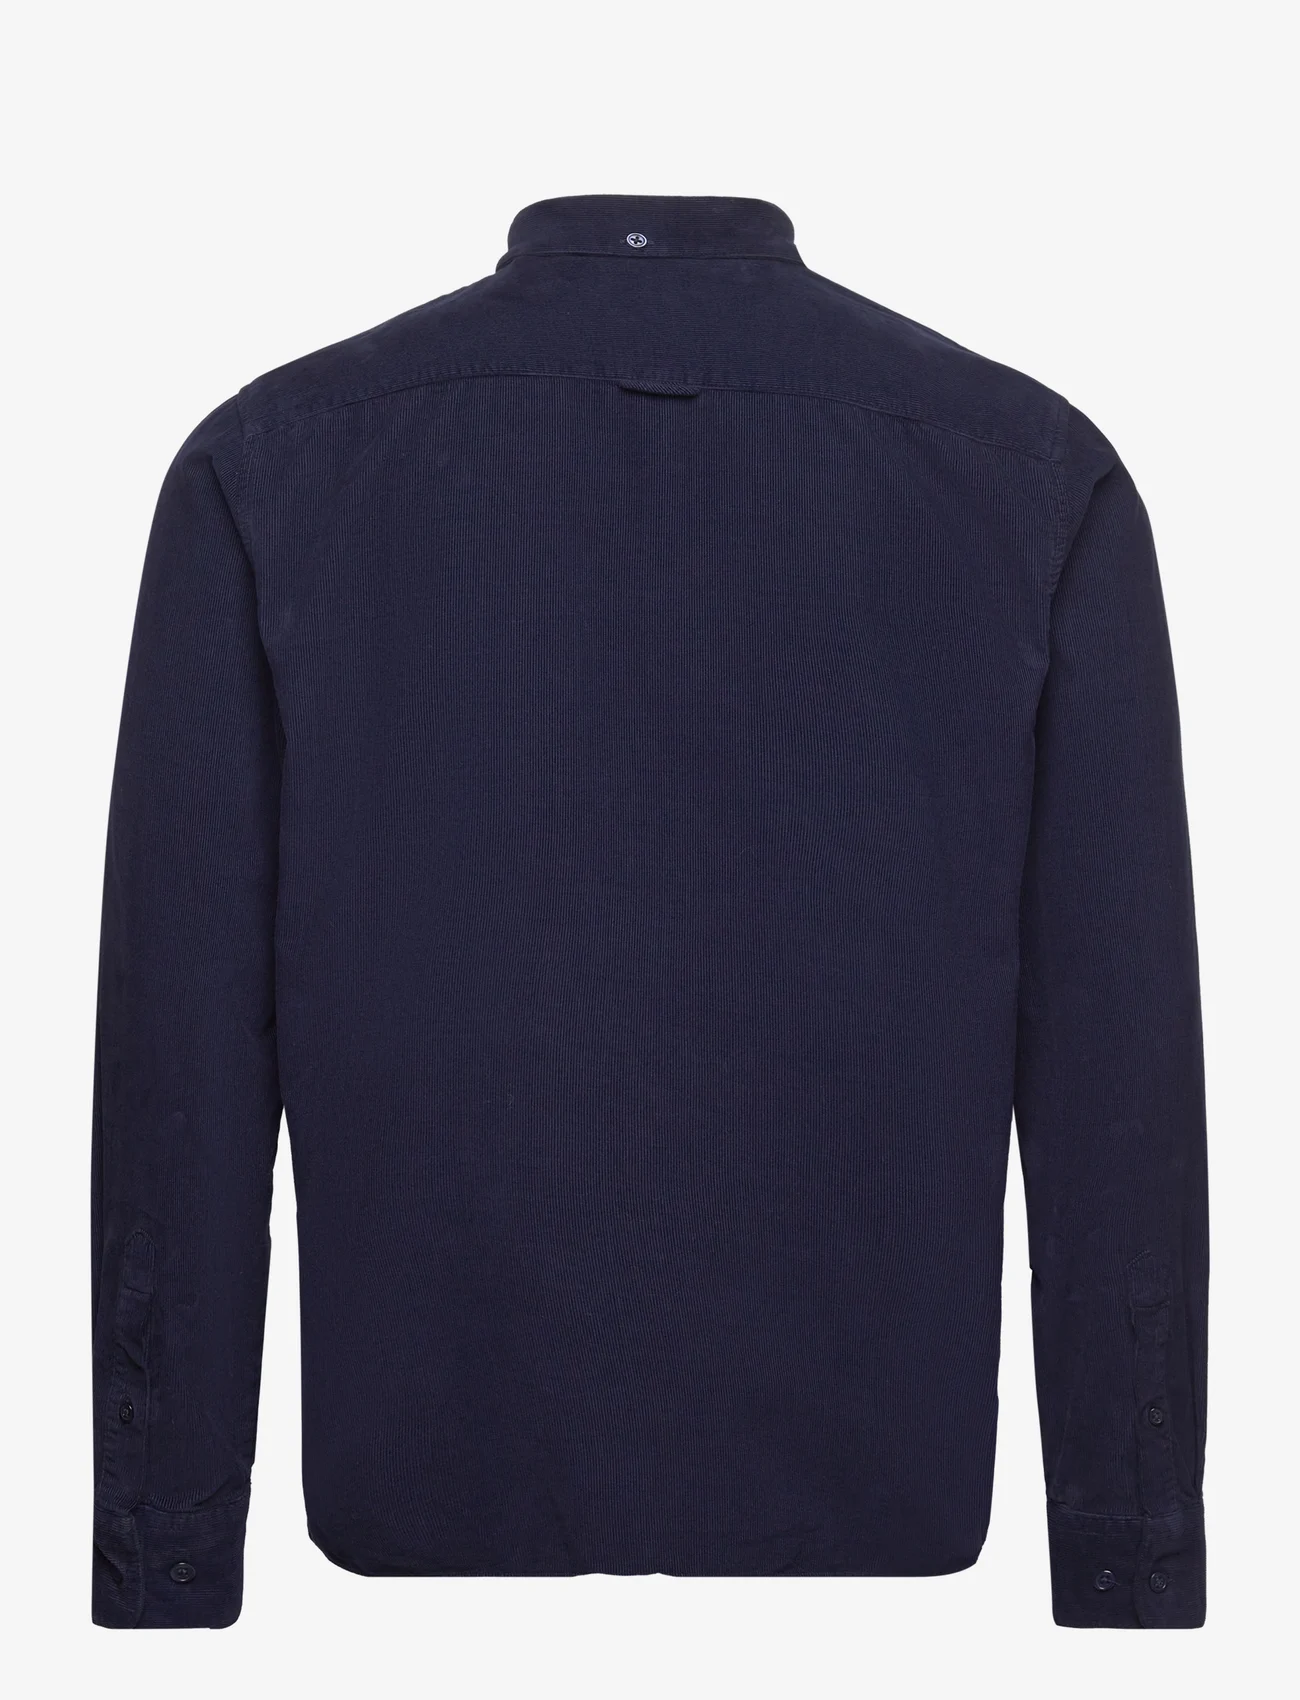 By Garment Makers - Vincent Corduroy Shirt GOTS - cordhemden - 3096 navy blazer - 1